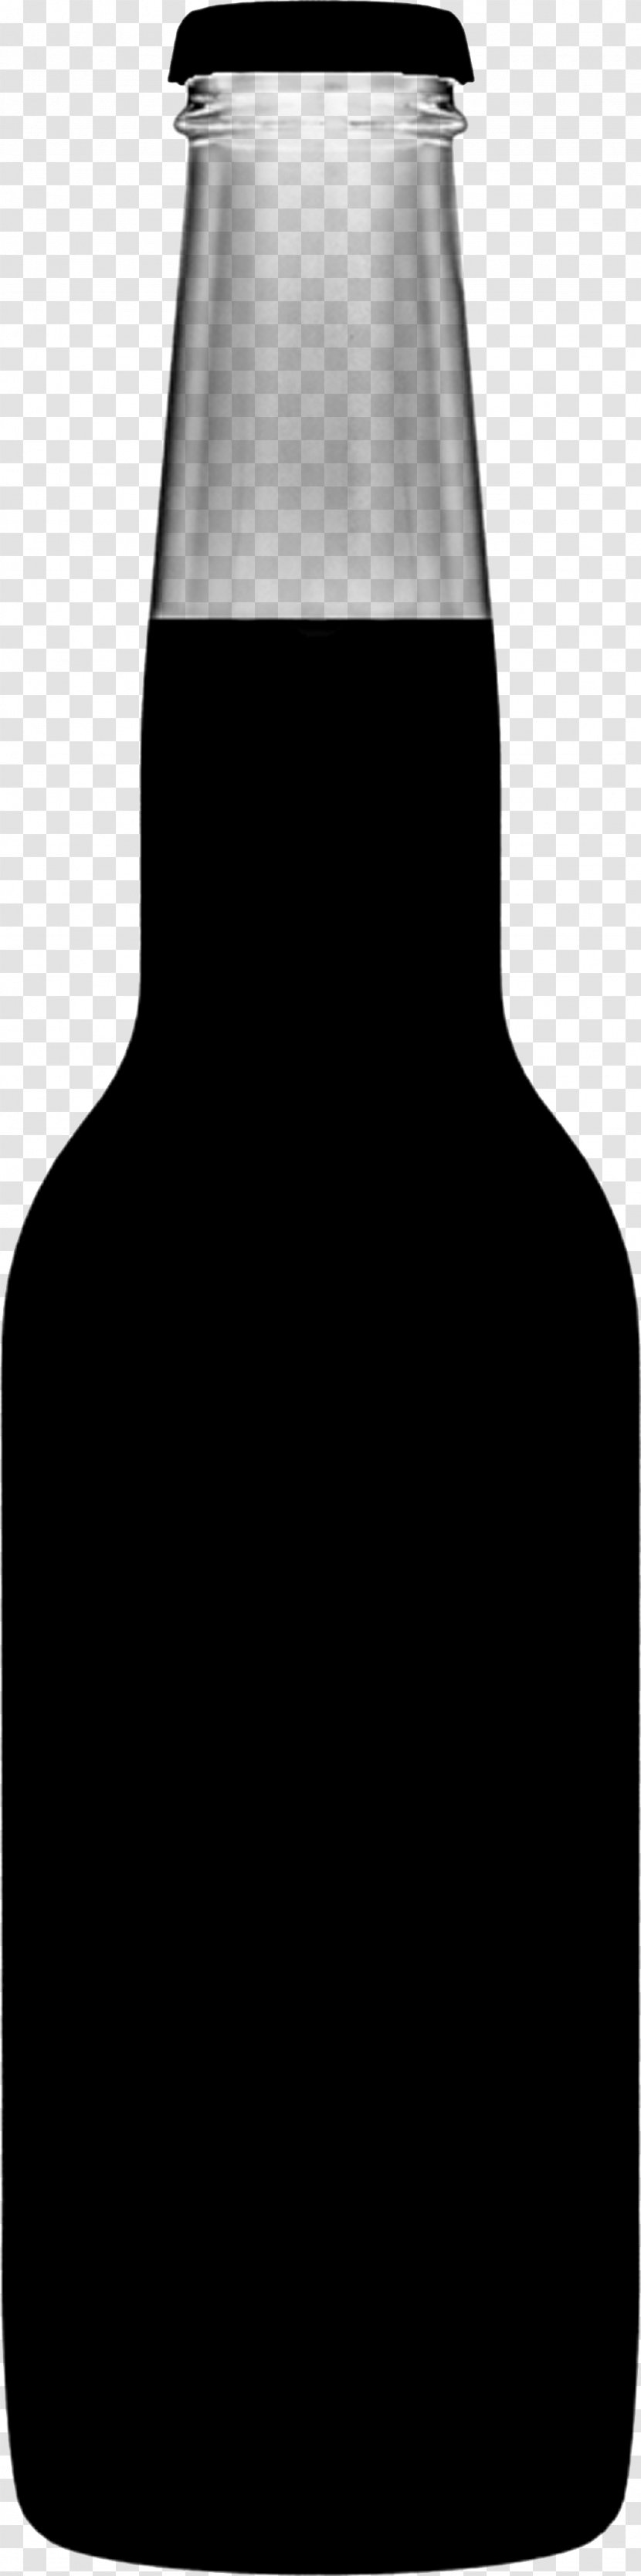 Beer Bottle Glass Alcoholic Beverages - Black - Home Accessories Transparent PNG